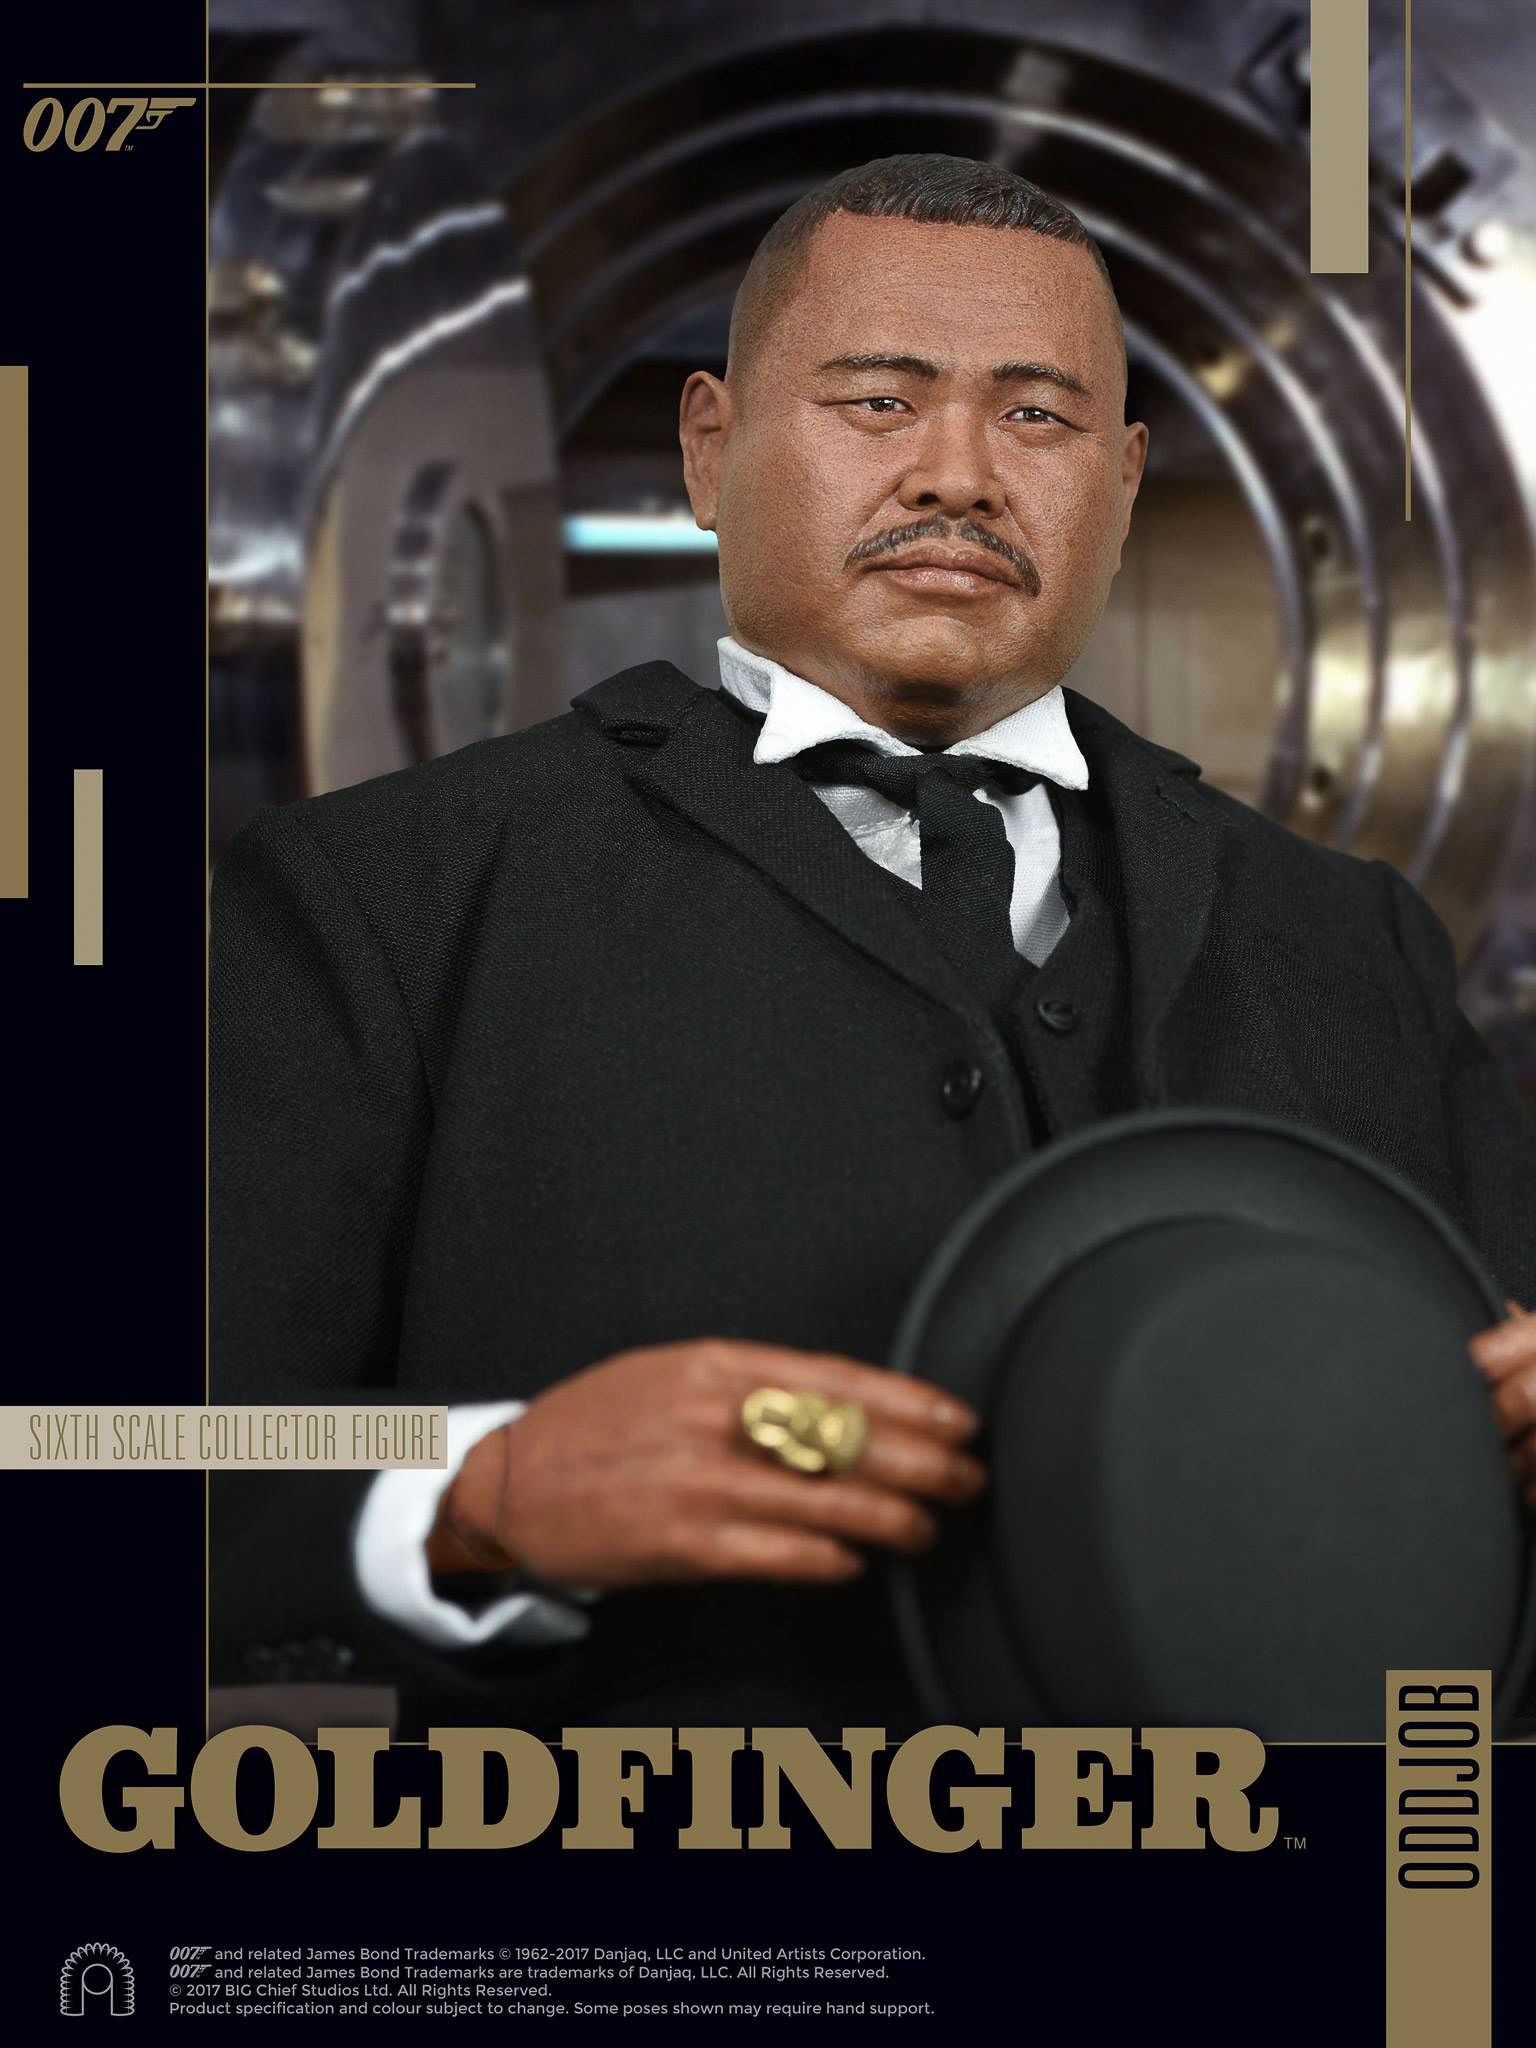 Big-Chief-James-Bond-Goldfinger-Oddjob-Full-Reveal-036.jpg